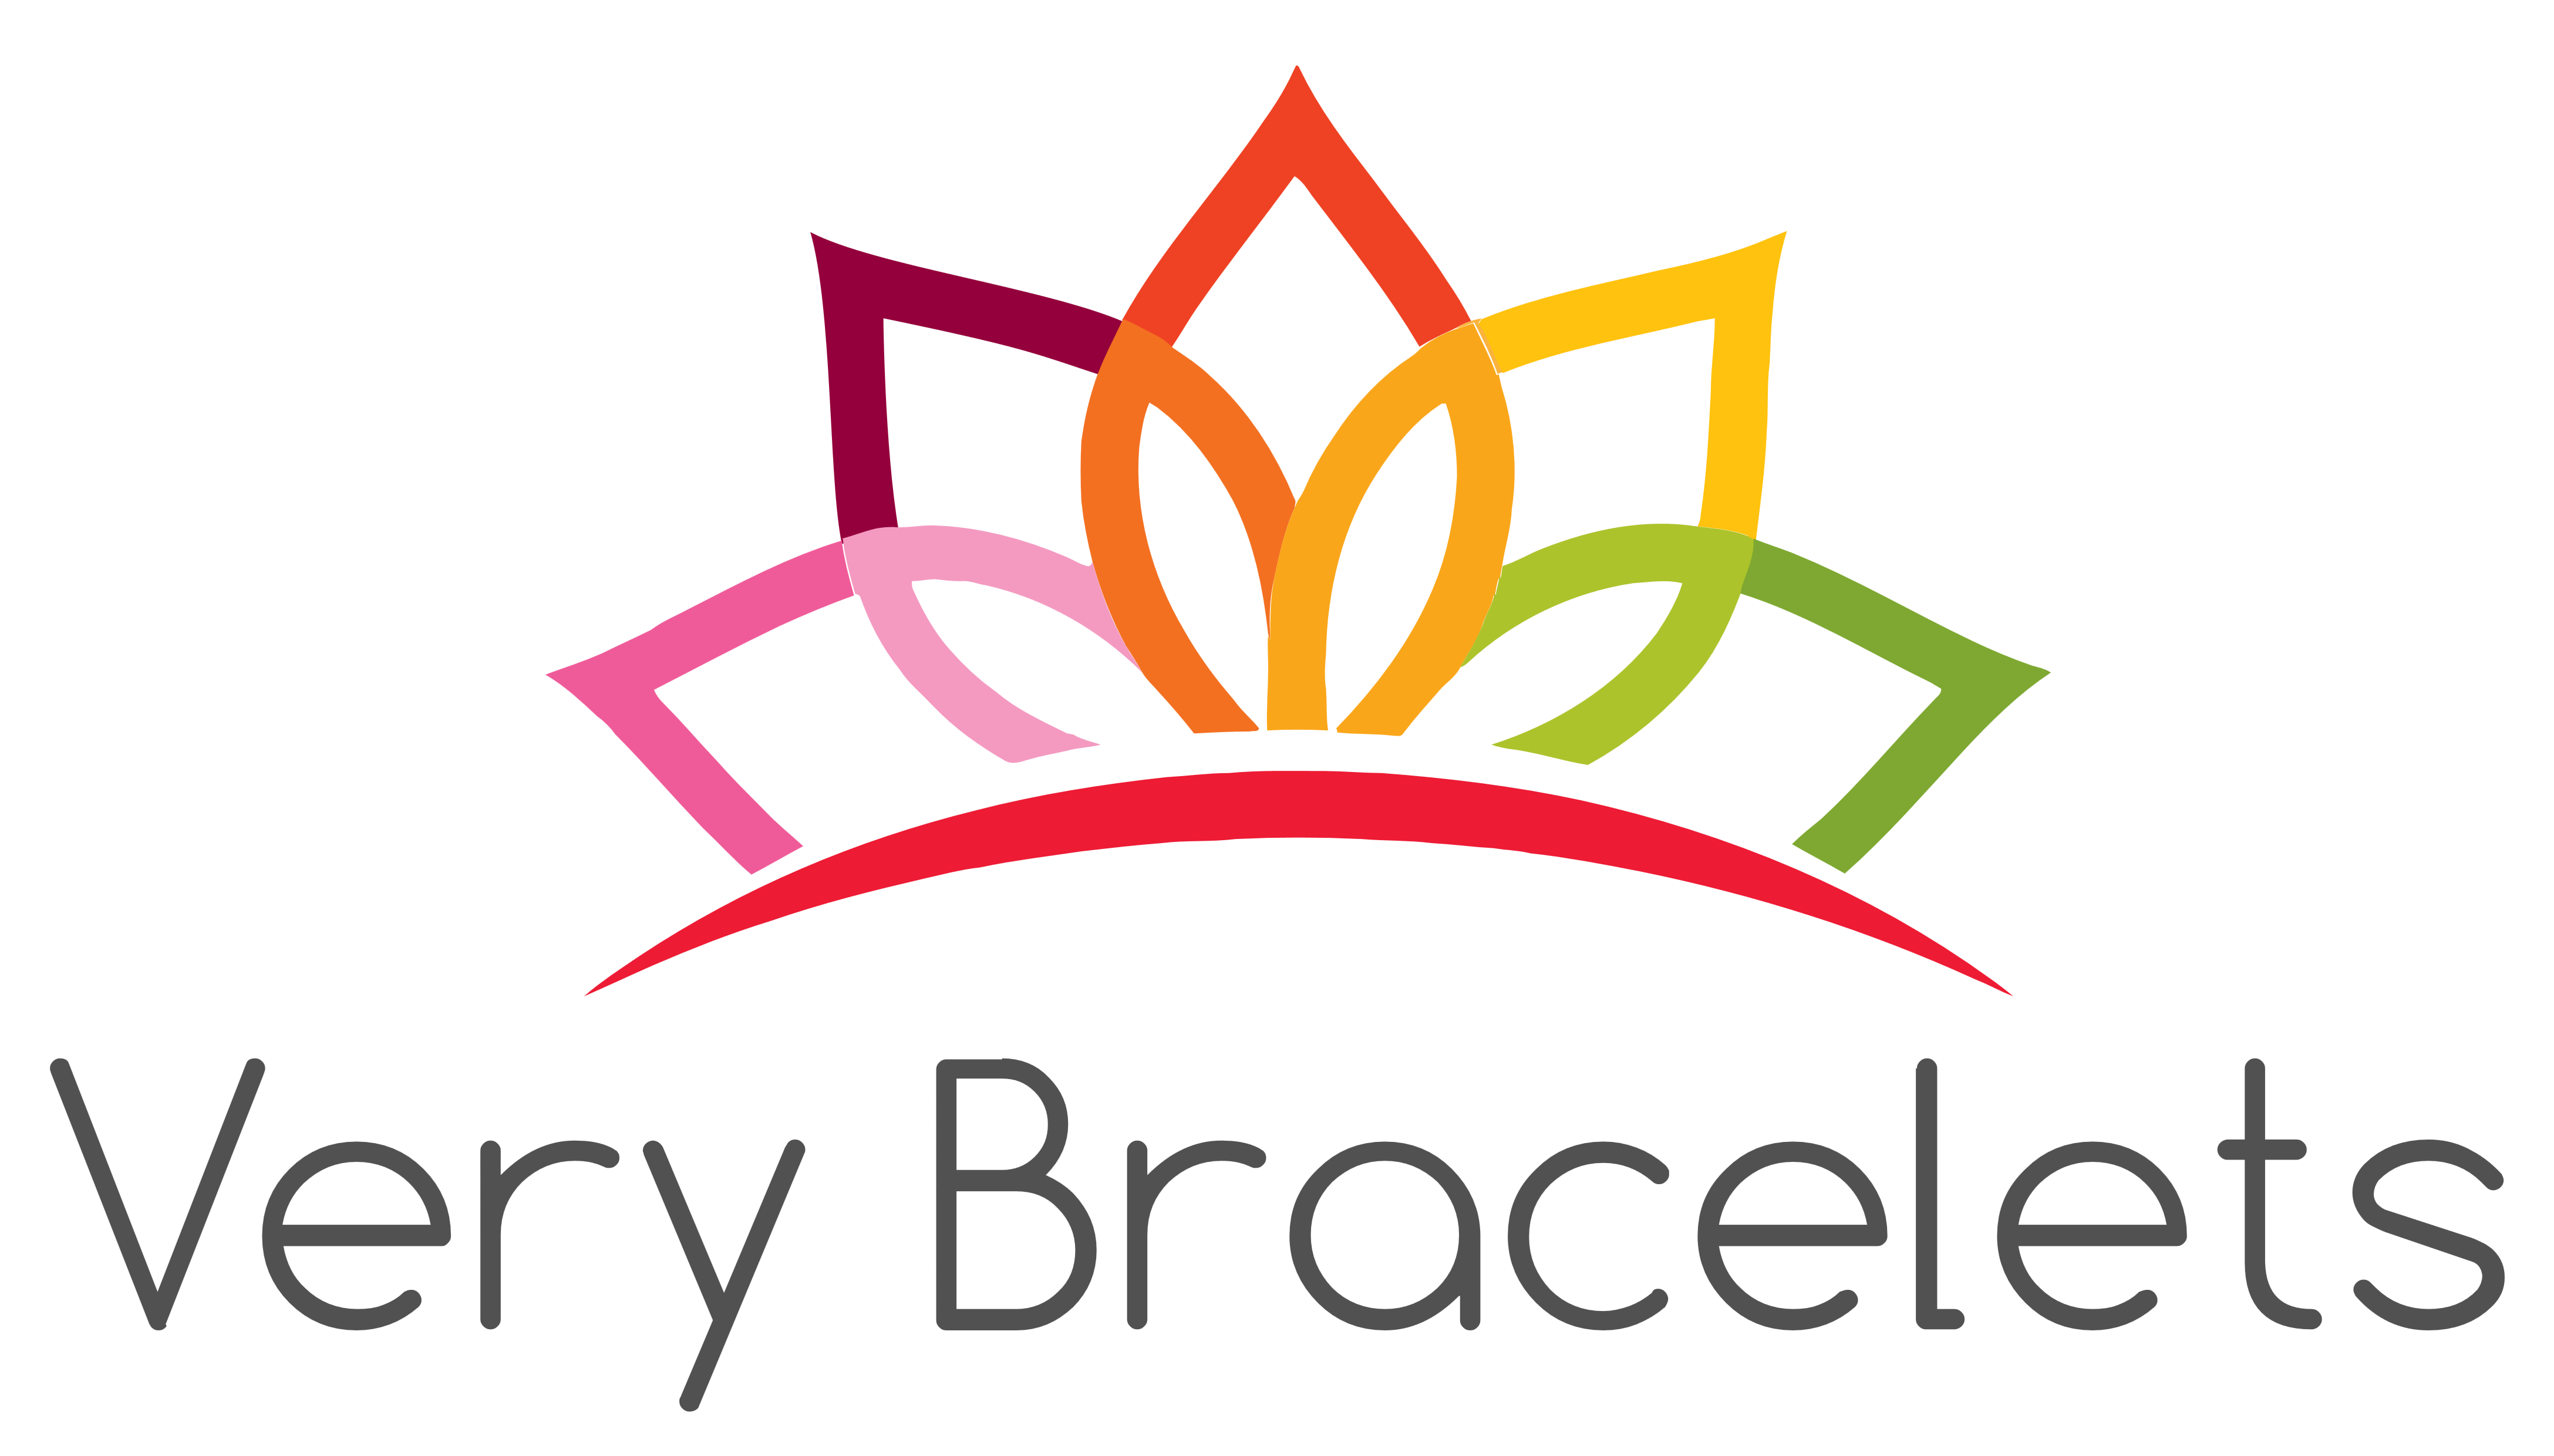 Very Bracelets – Logos Download